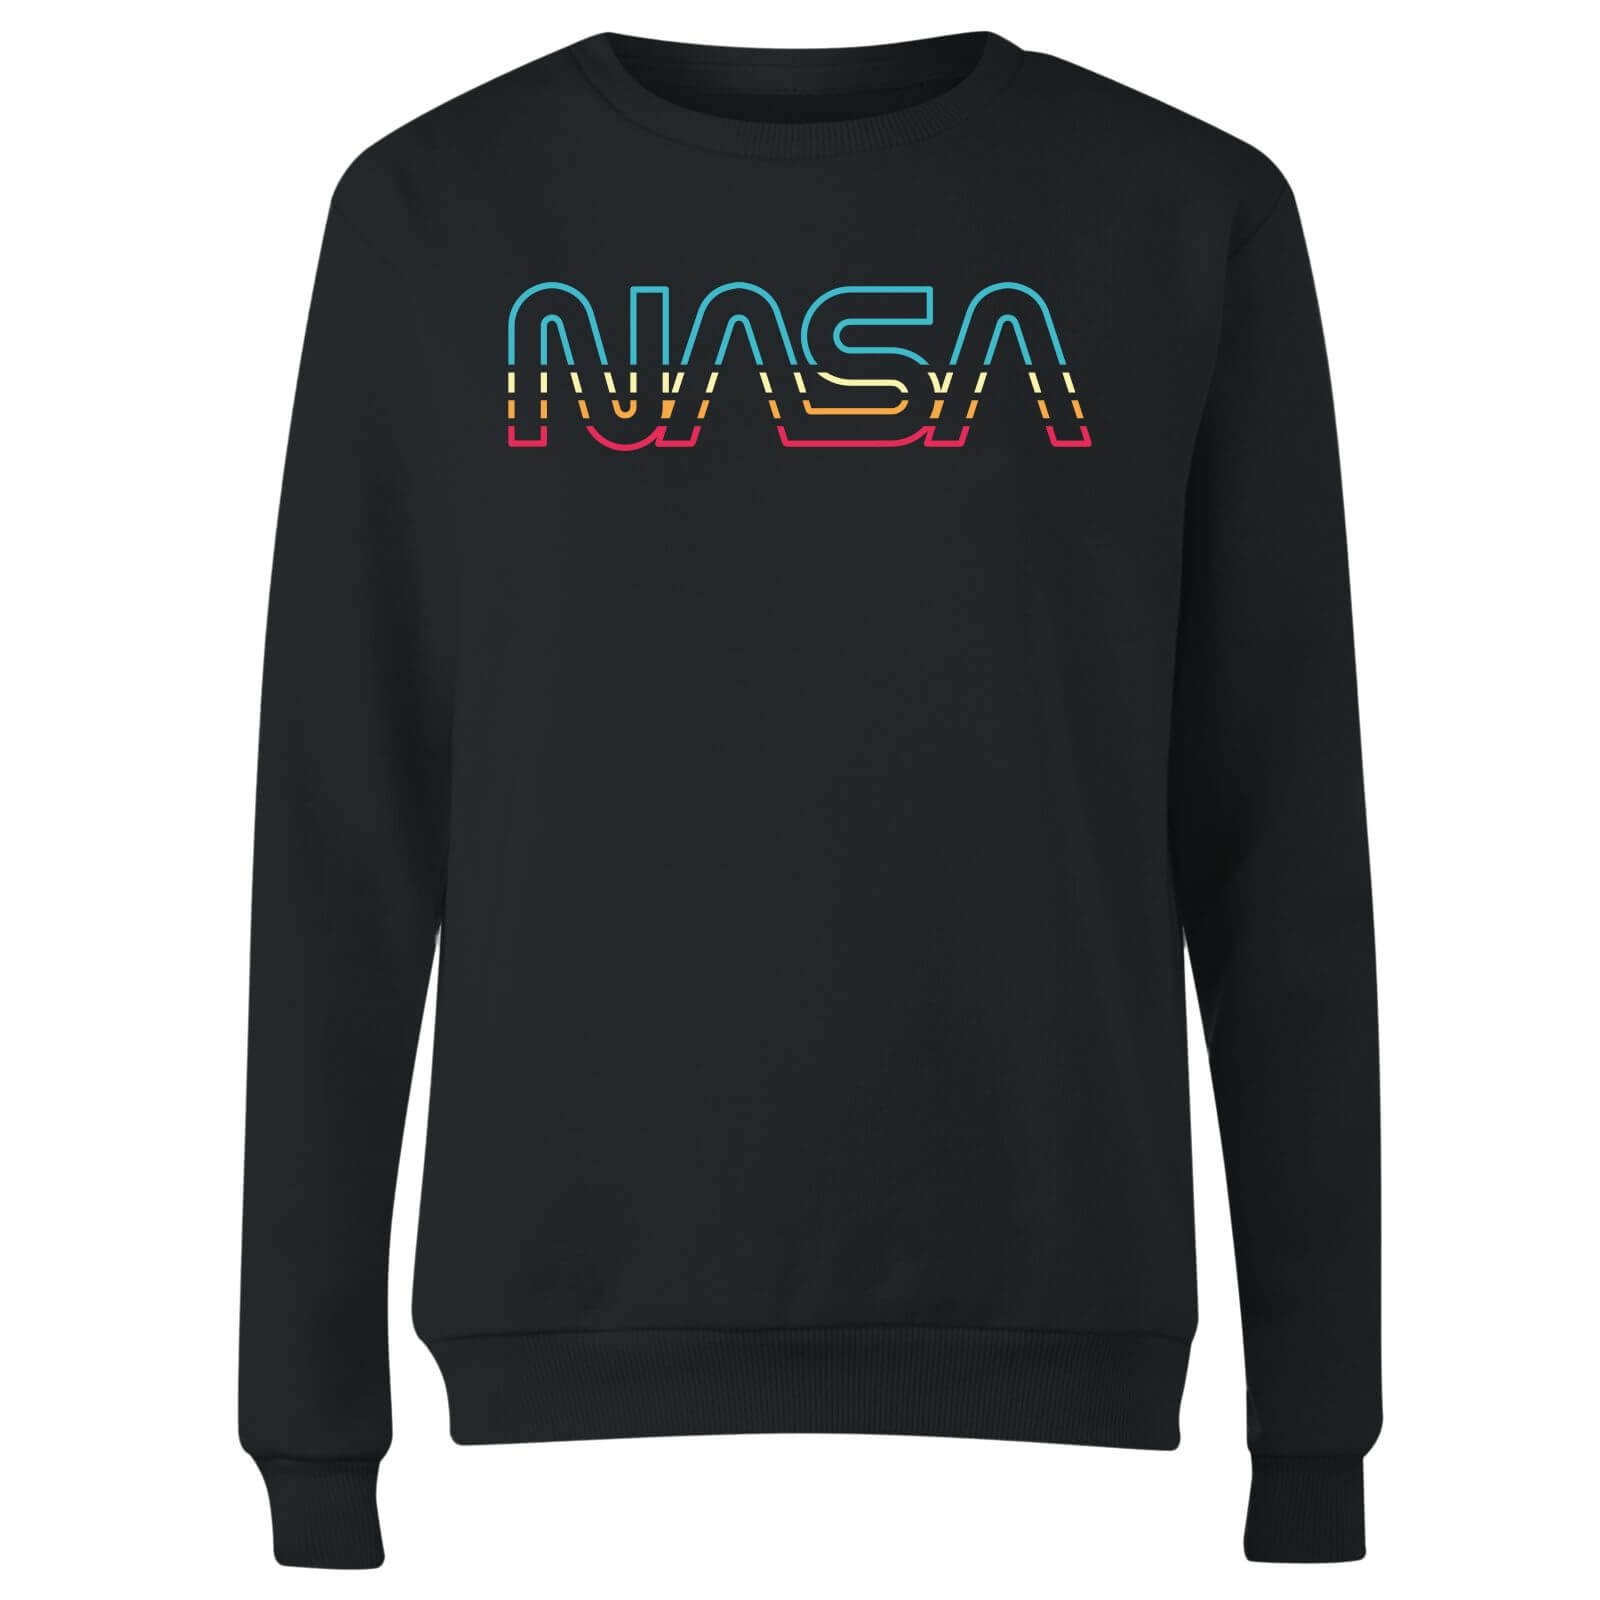 NASA Spectrum Women's Sweatshirt - Black - XS - Black